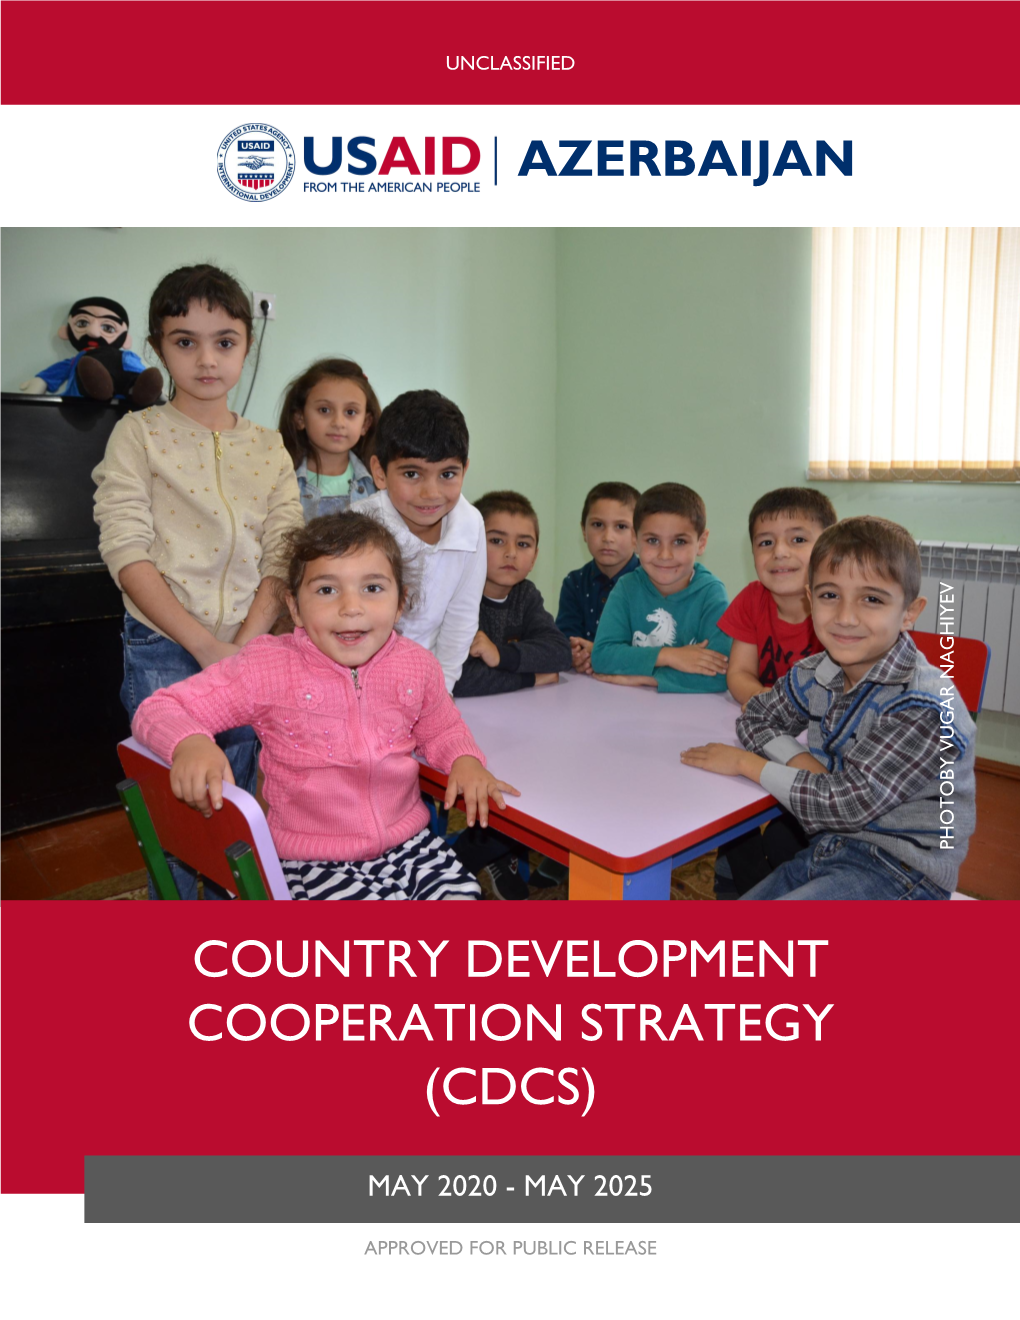 Azerbaijan: Country Development Cooperation Strategy